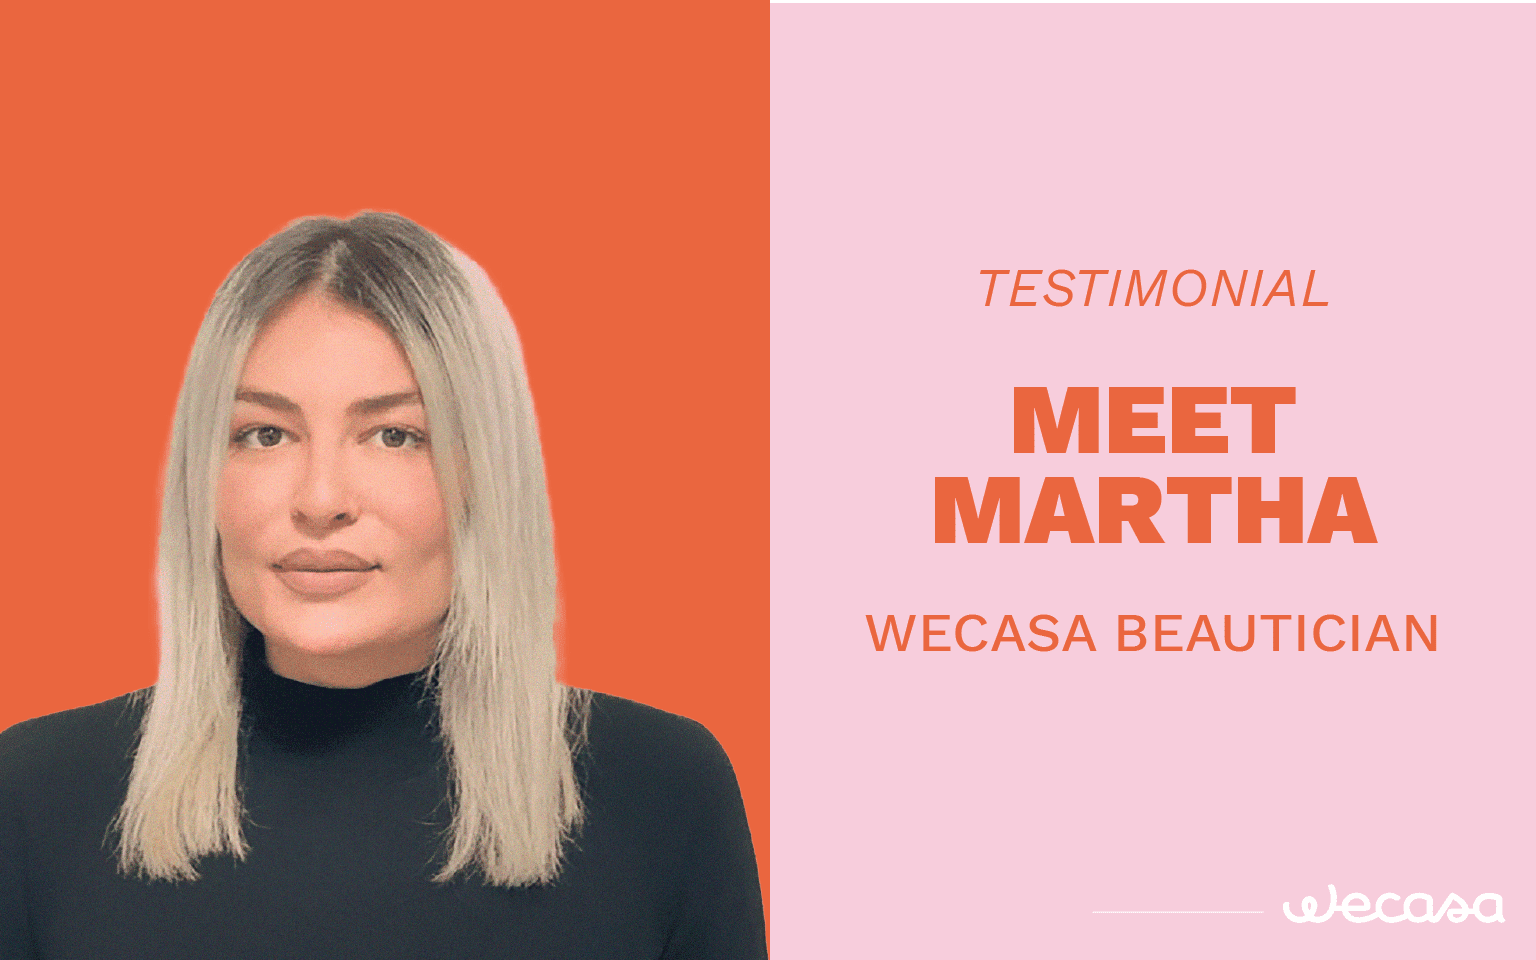 Martha Wecasa beautician